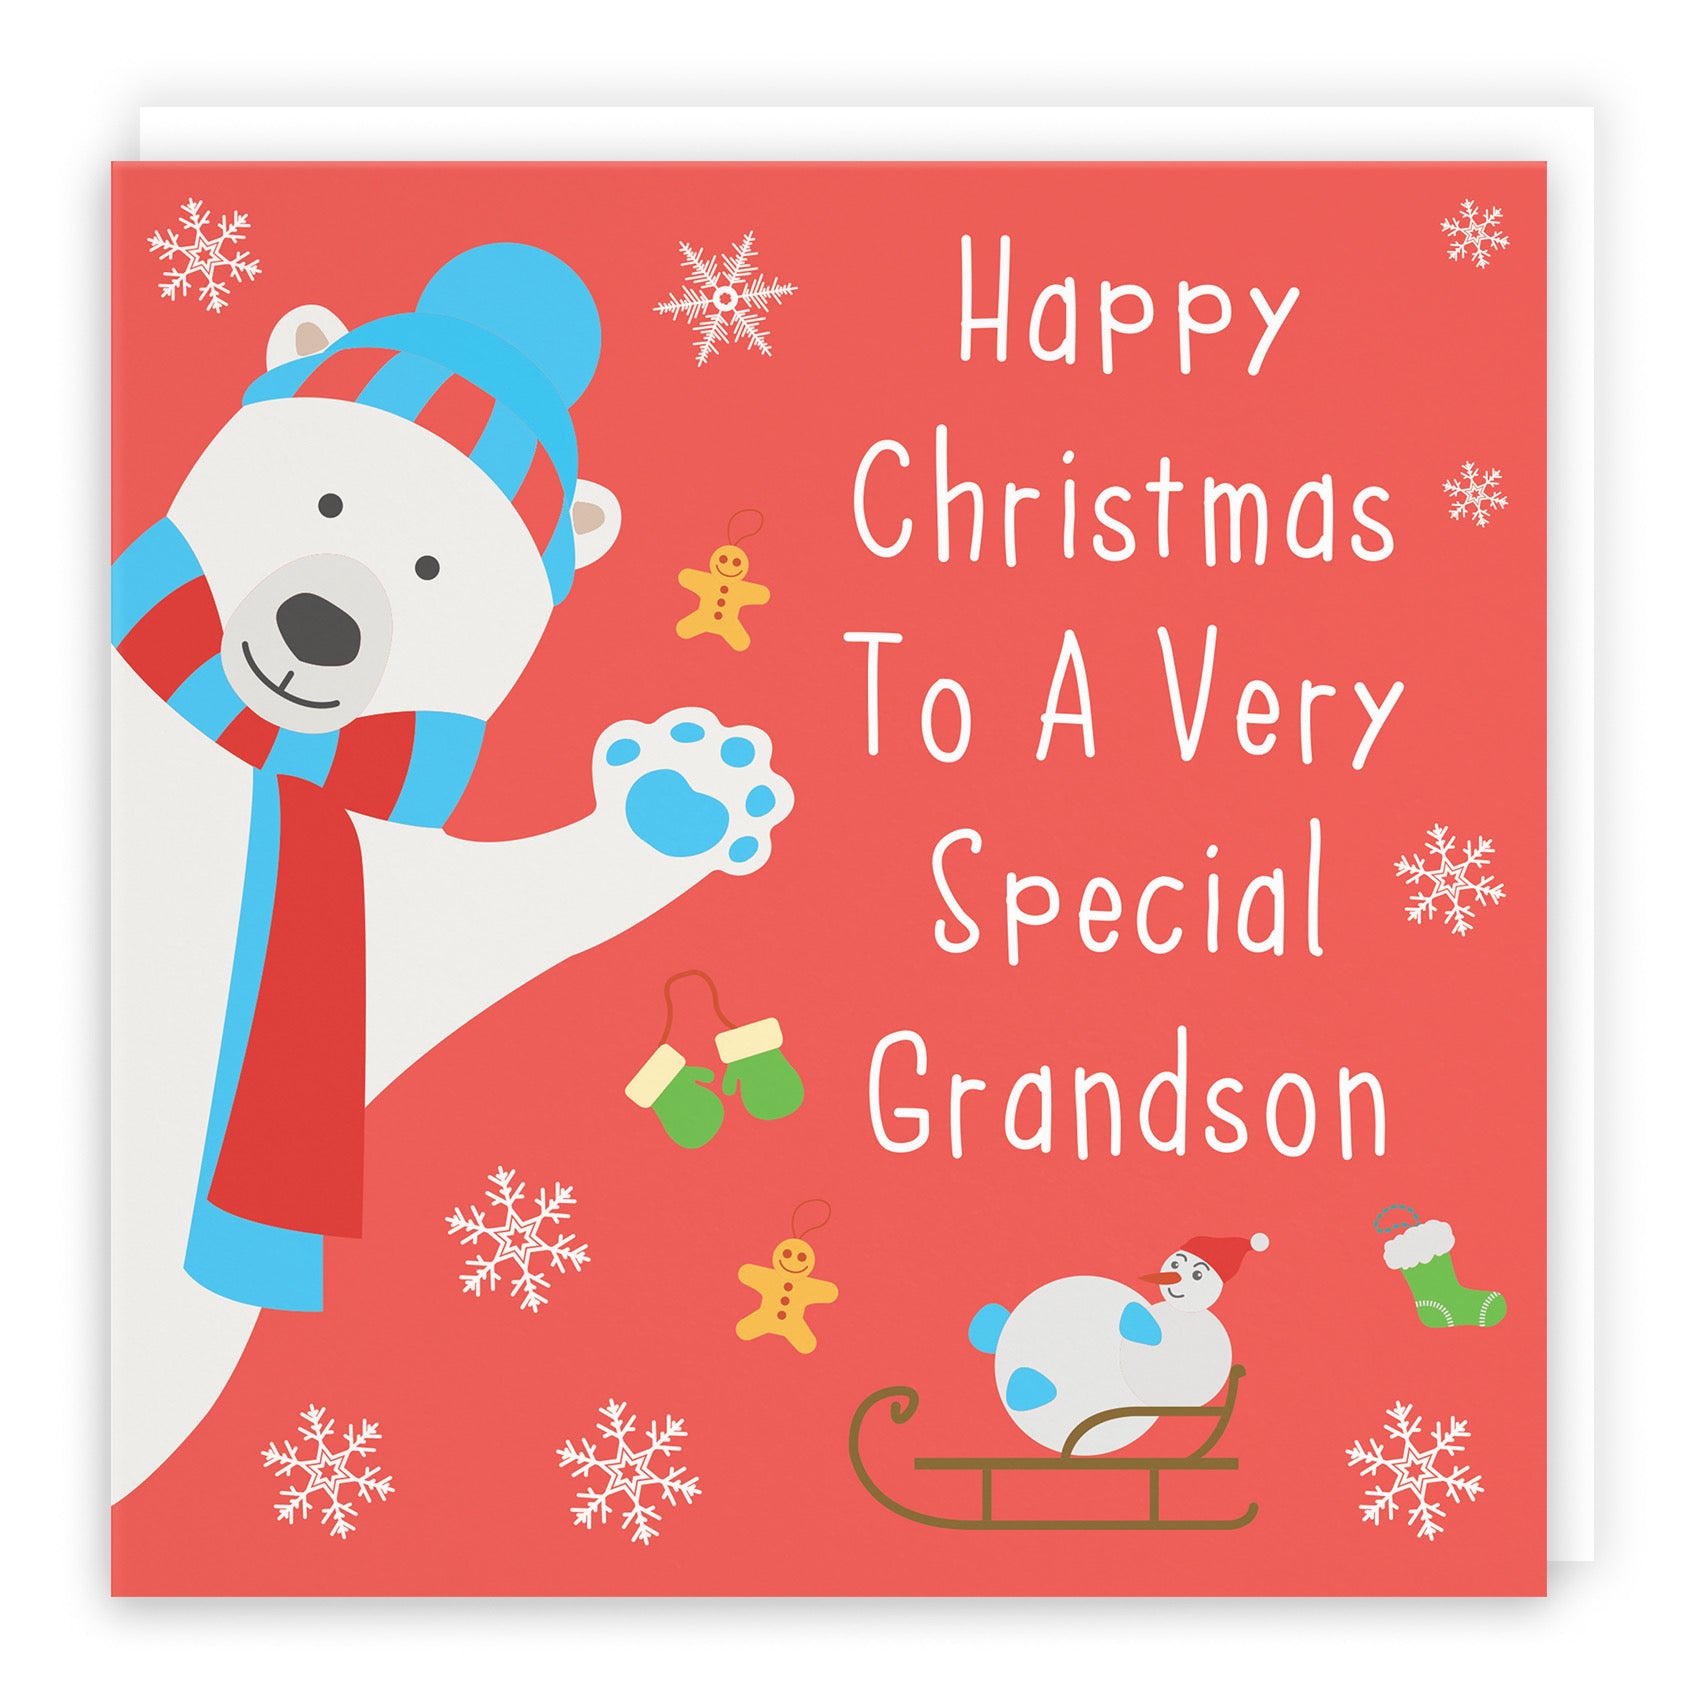 Grandson Iconic Christmas Card - Default Title (B08JJWPXSD)